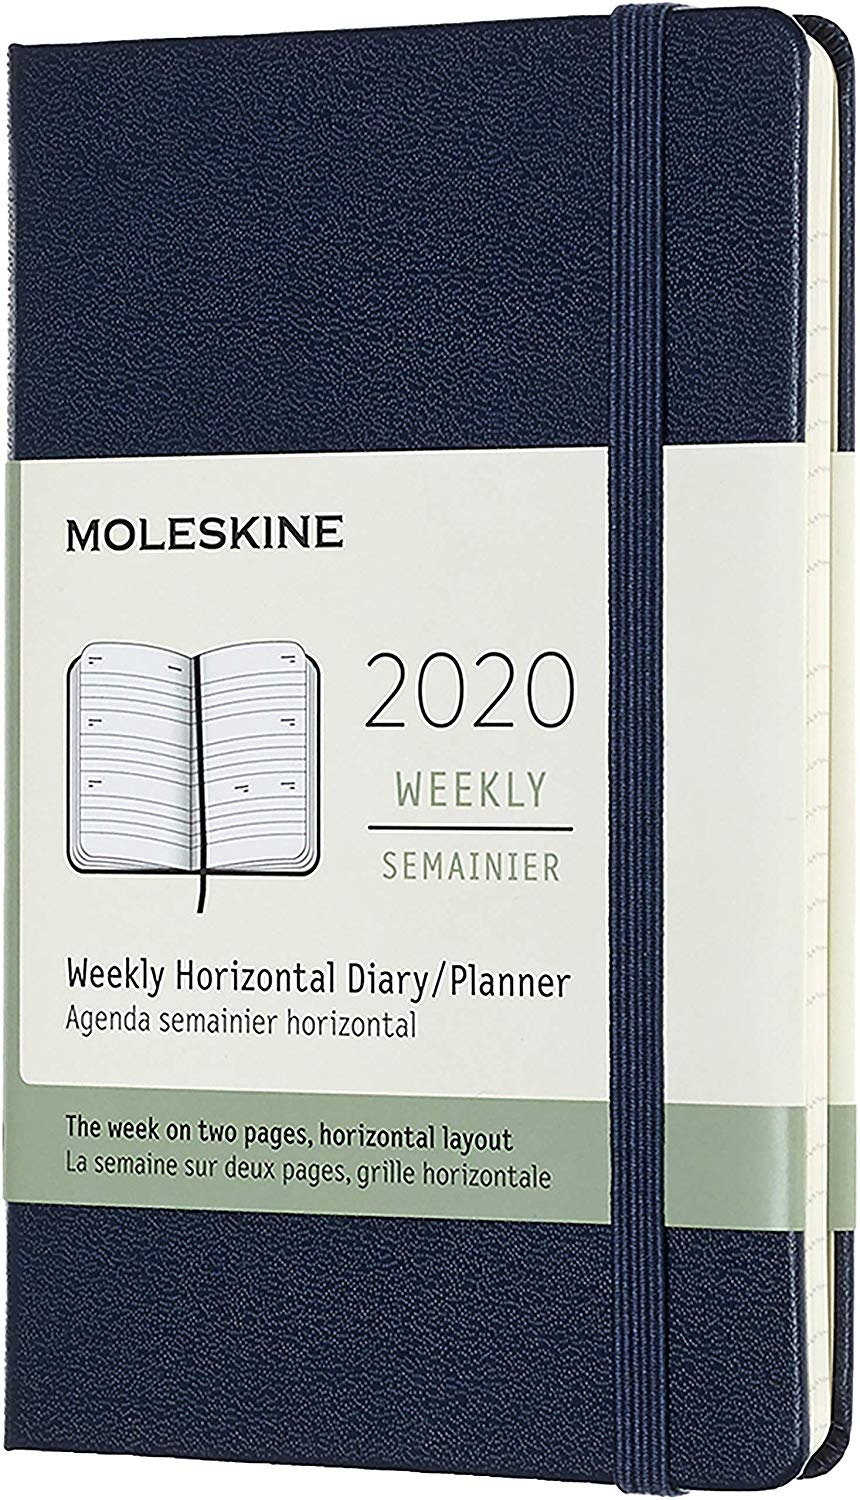 Agenda 2020 - Moleskine 12-Month Weekly Notebook Planner - Sapphire Blue, Pocket, Hard cover | Moleskine